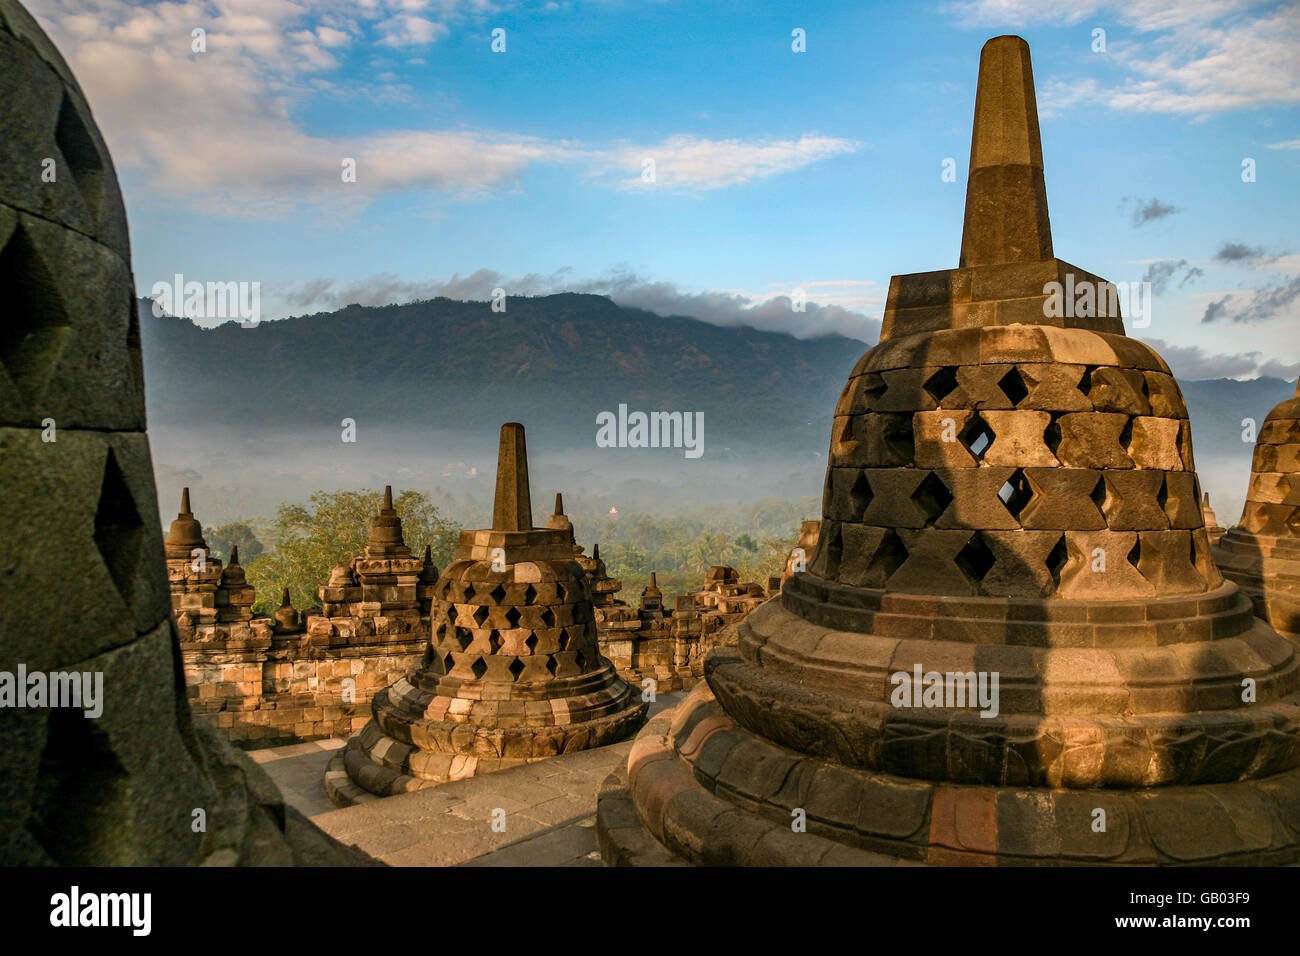 Indonesia Java Central antiguo templo Budista Borobudur Yogyakarta Foto de stock